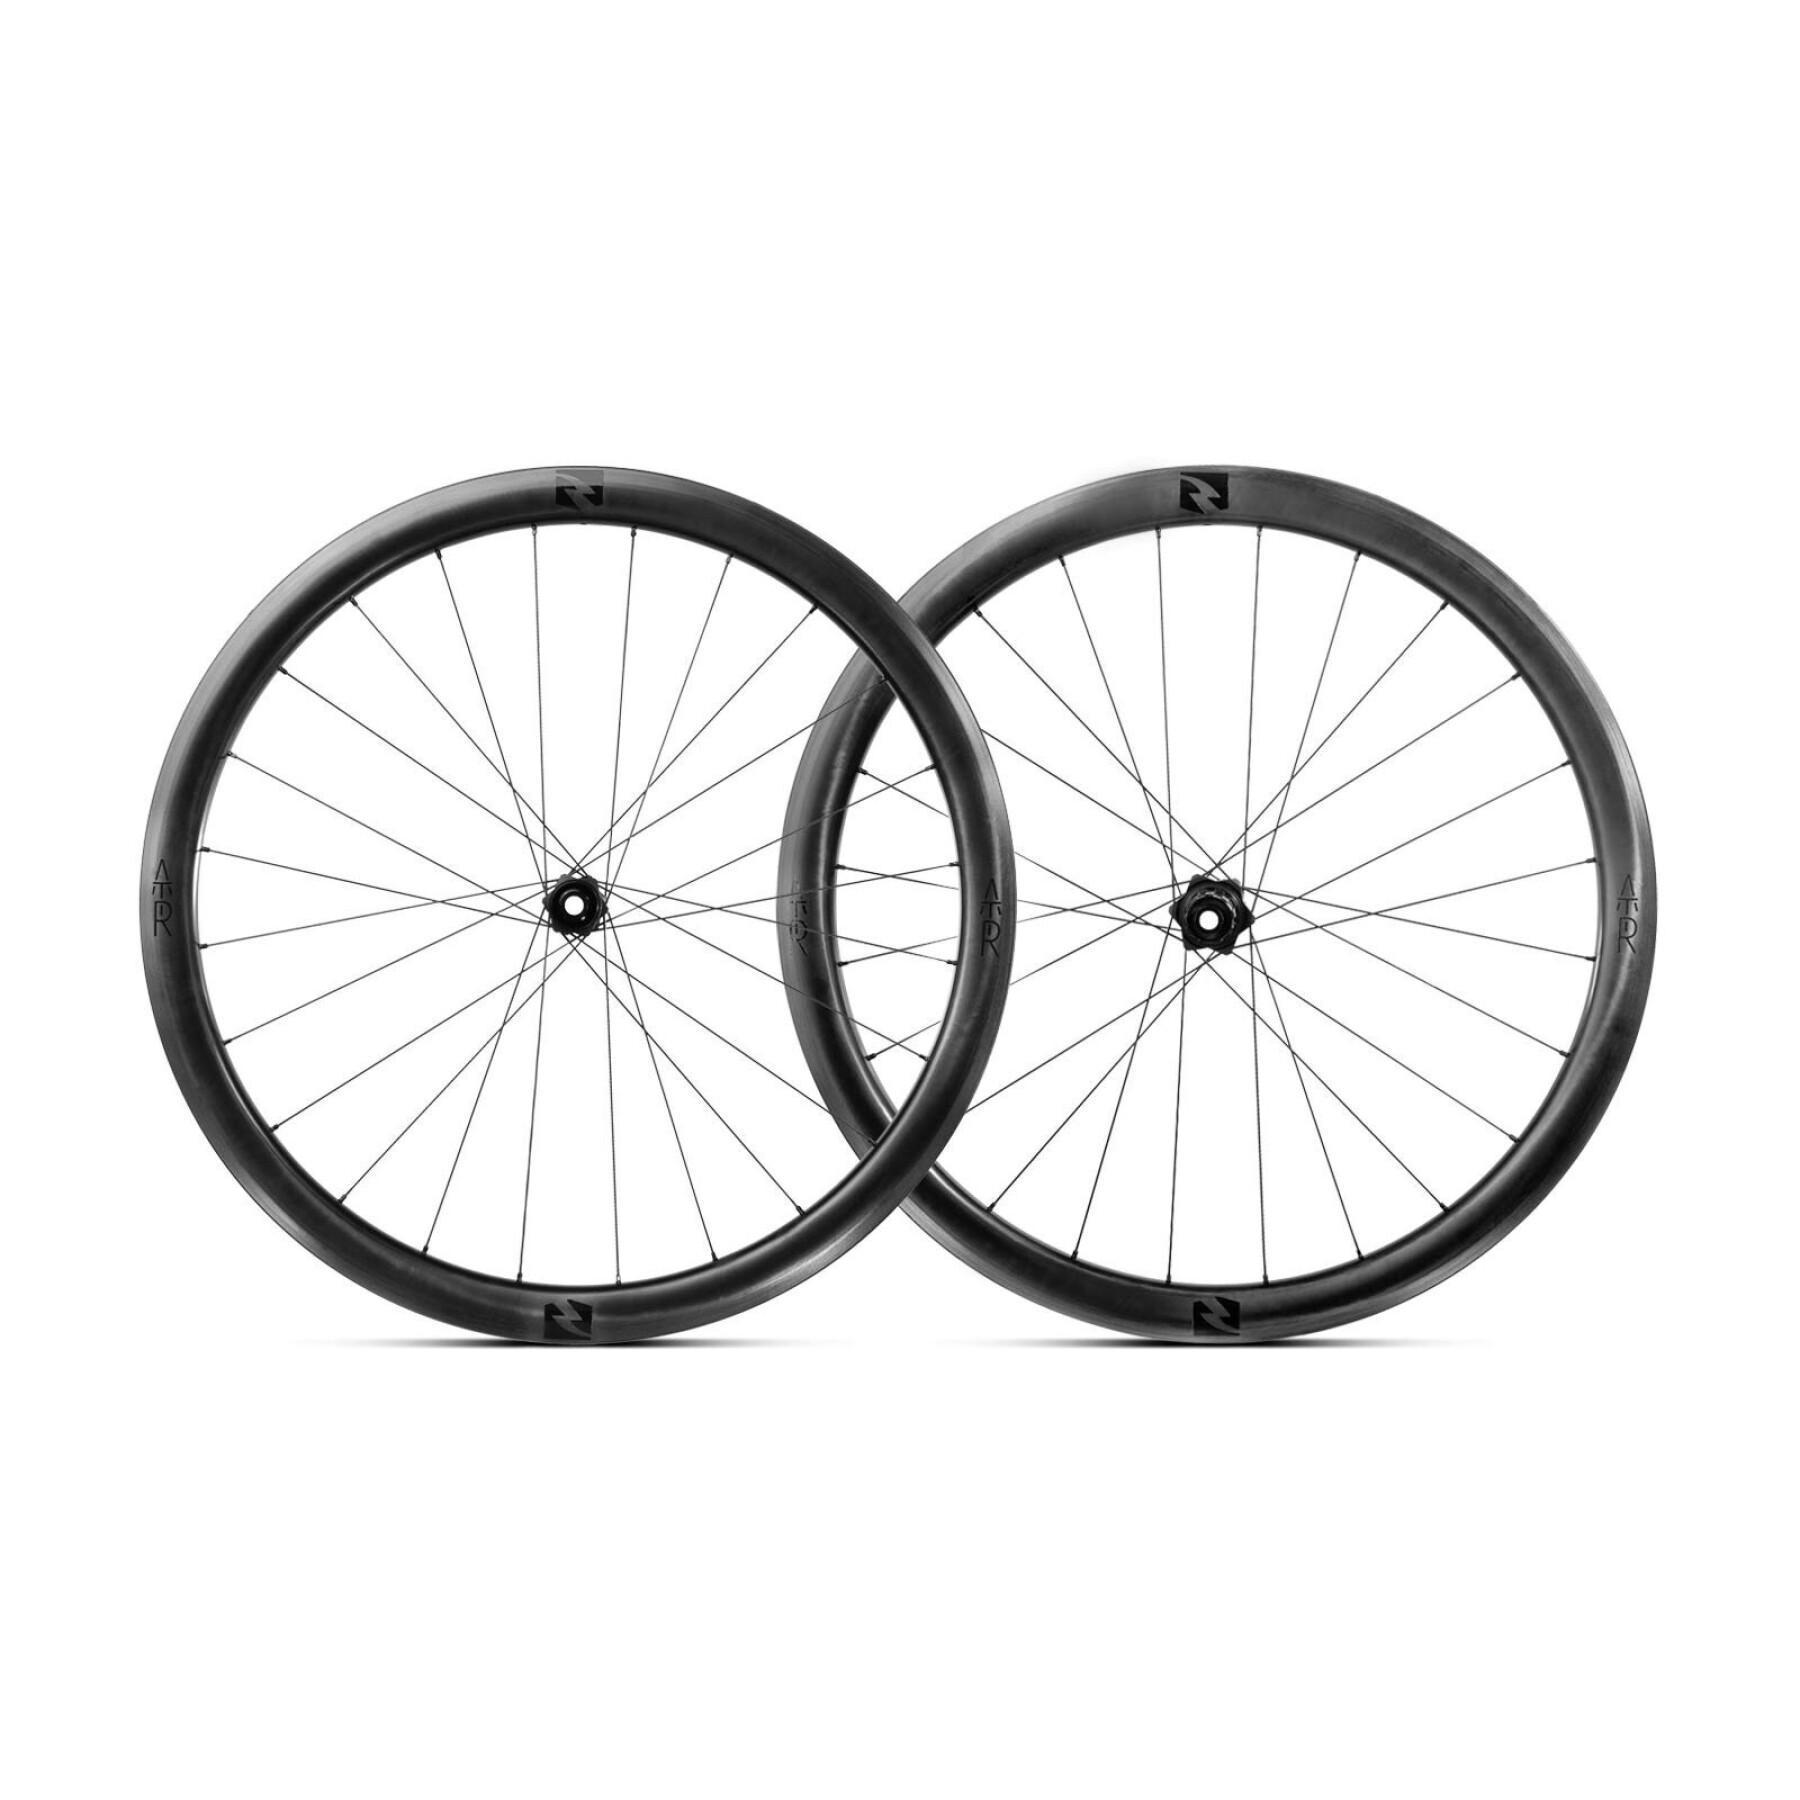 Pair of tubeless disc bicycle wheels Reynolds ATR 650b XDR